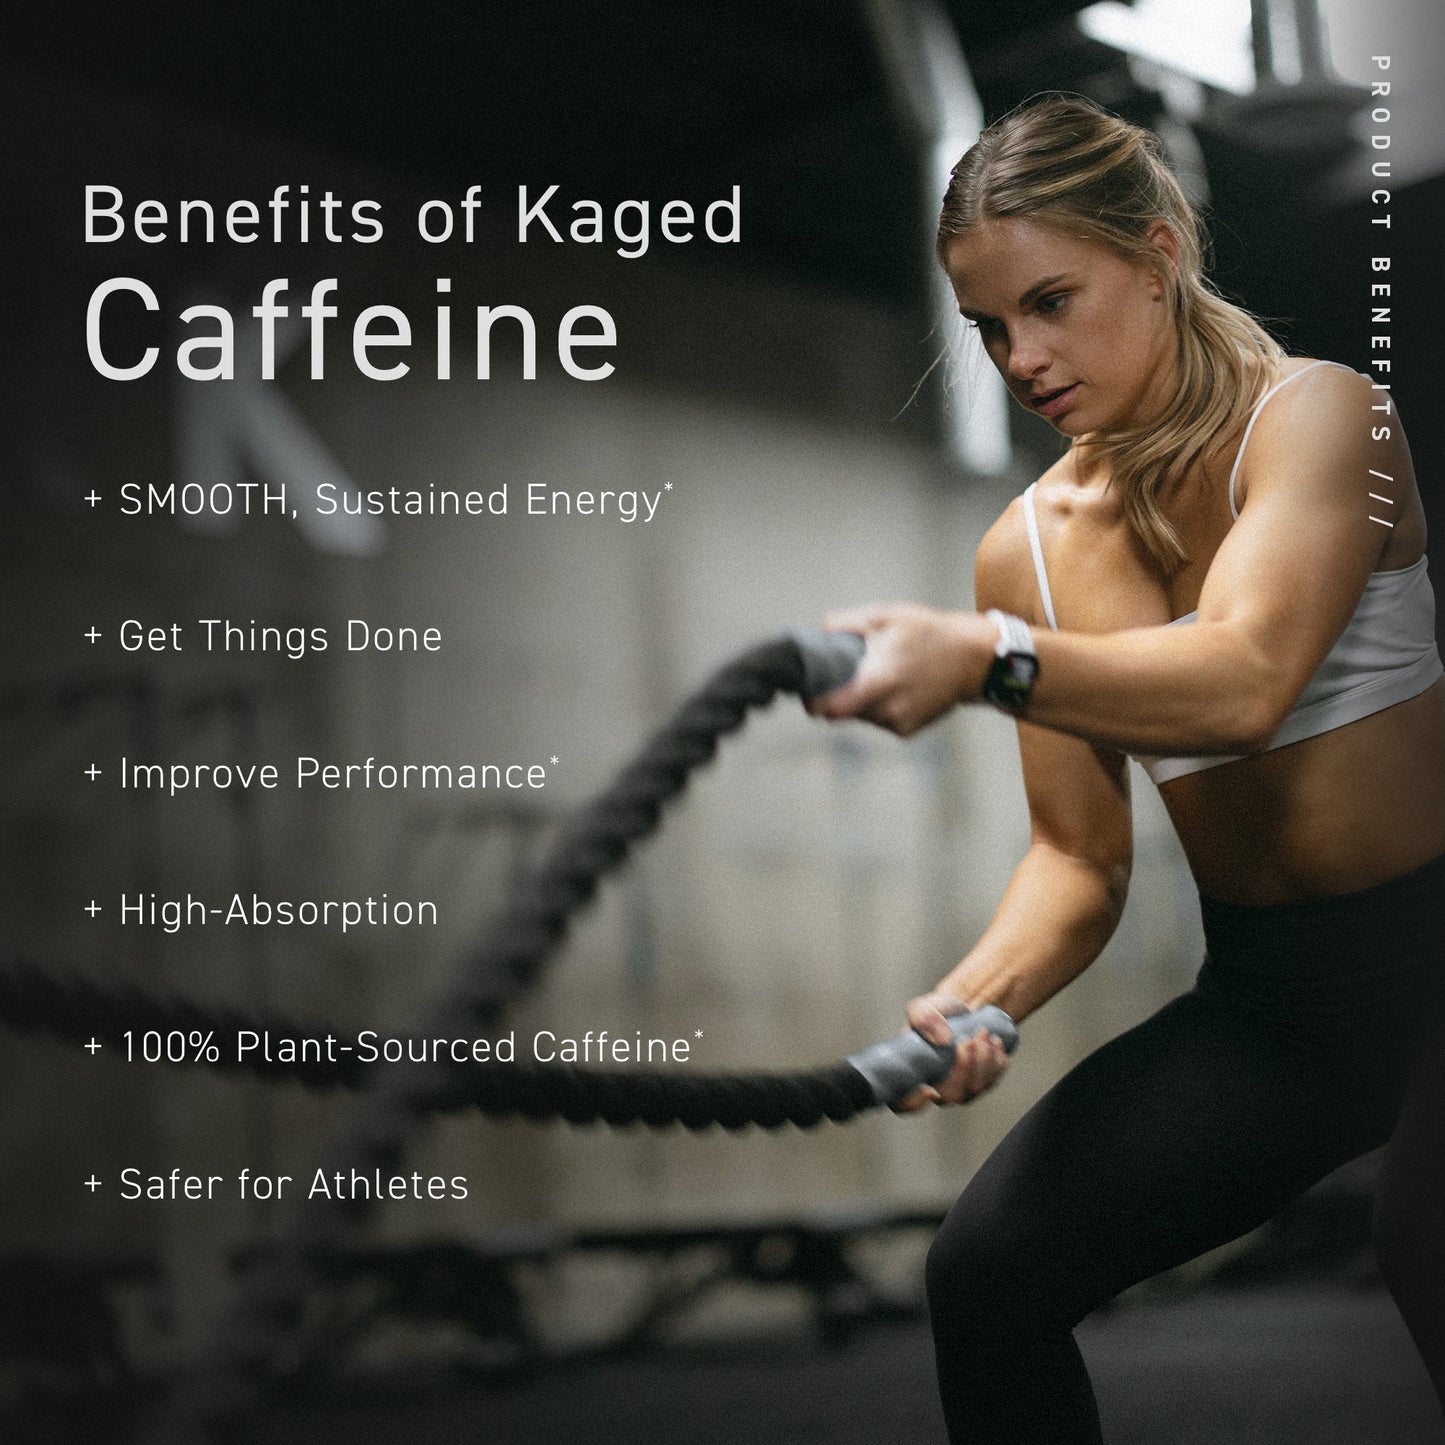 KAGED Caffeine Caplets